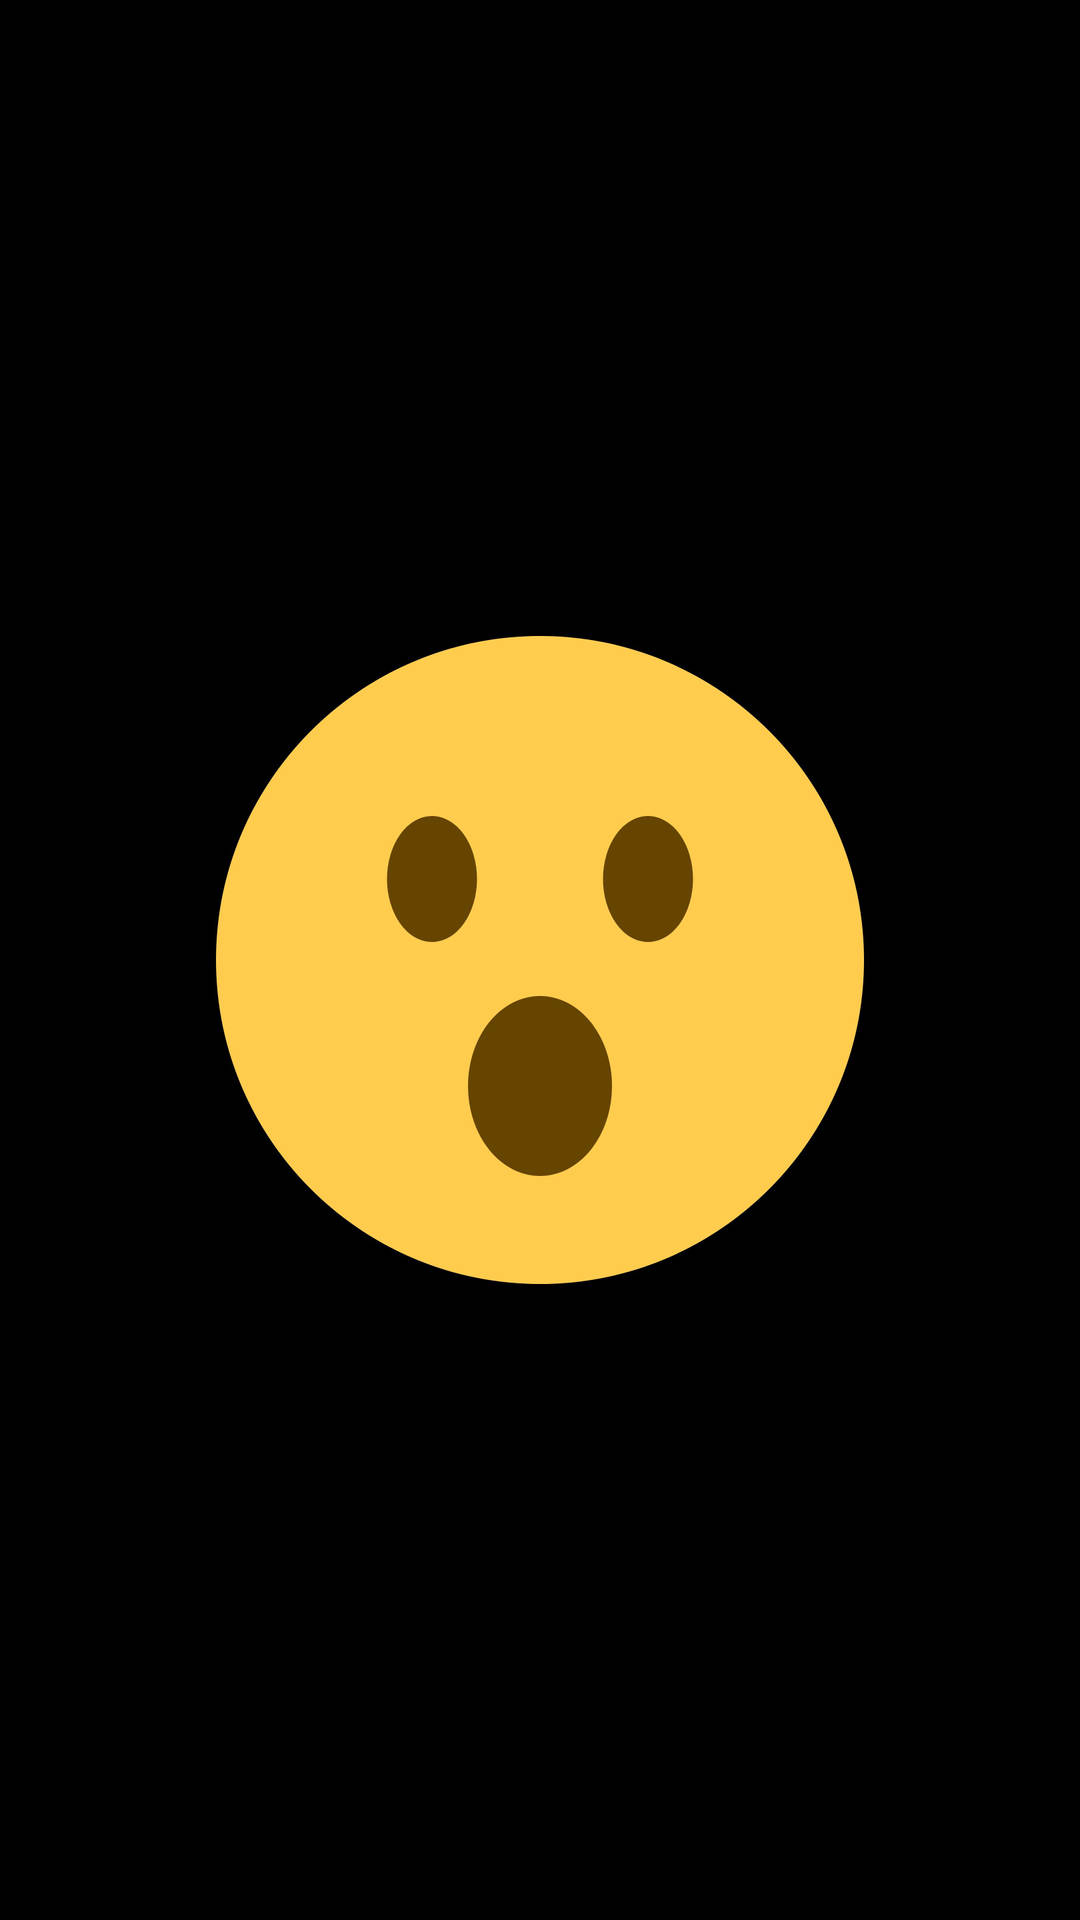 Shocked Emoji Face In Black Background Wallpaper